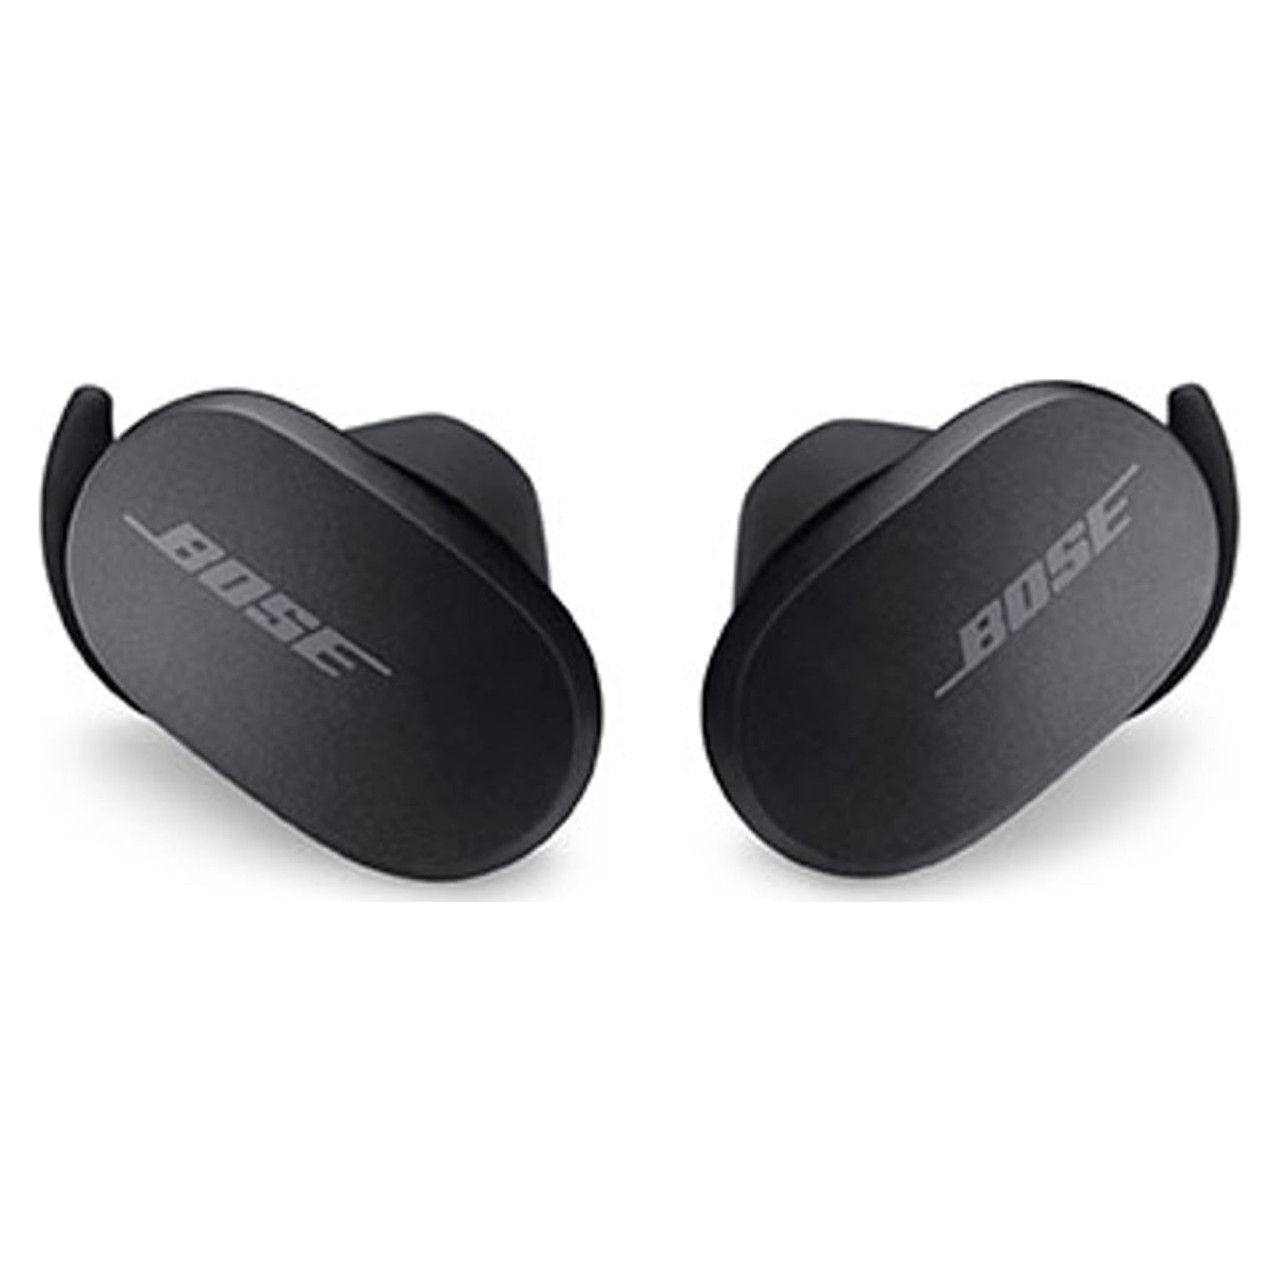 Buy Bose QuietComfort Earbuds - Black | Conn's HomePlus